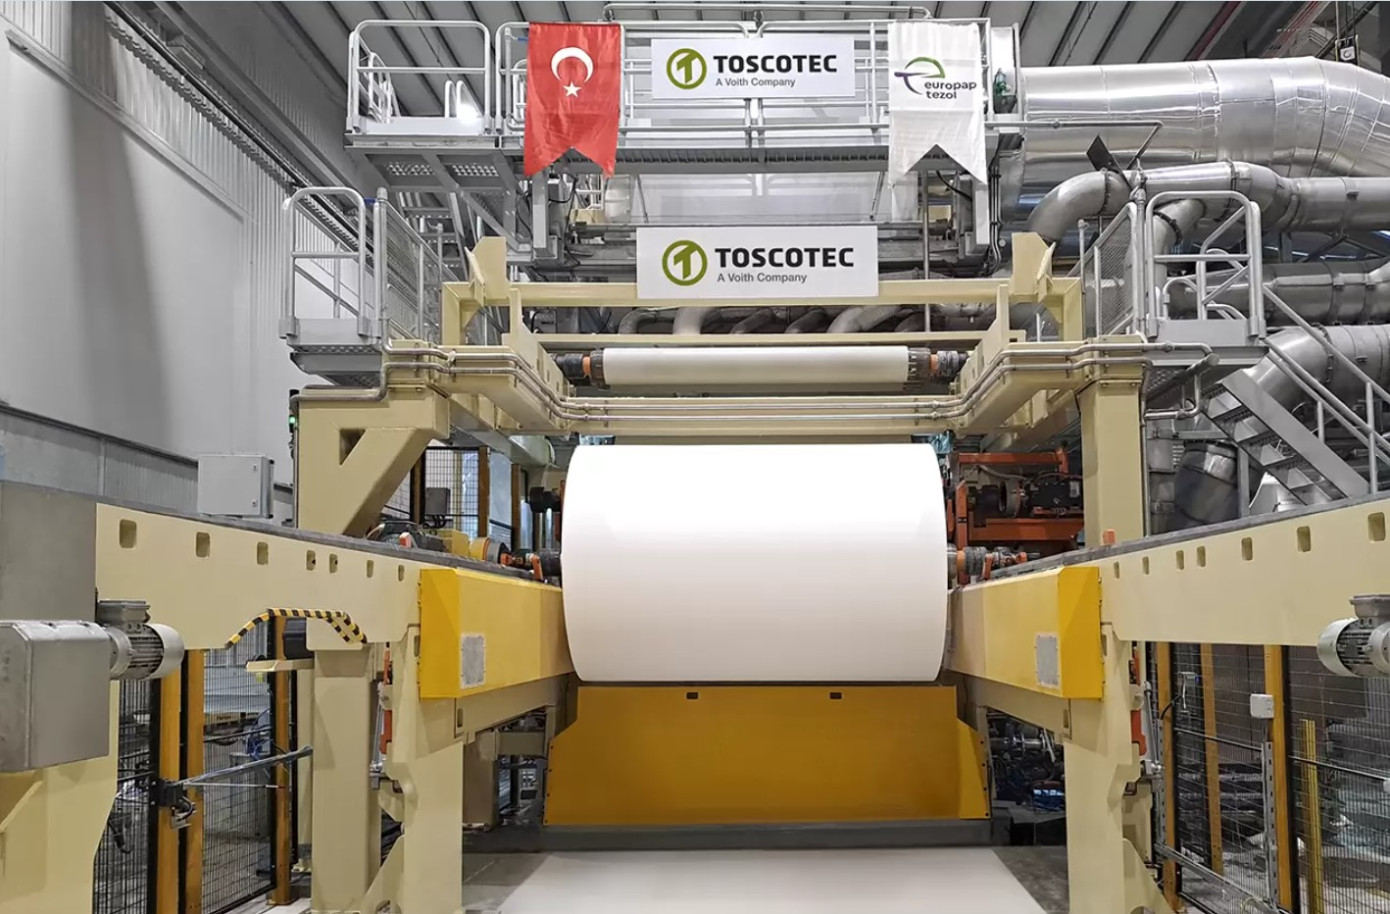 Europap Tezol Kağit starts up tissue machine at Mersin plant in Turkey